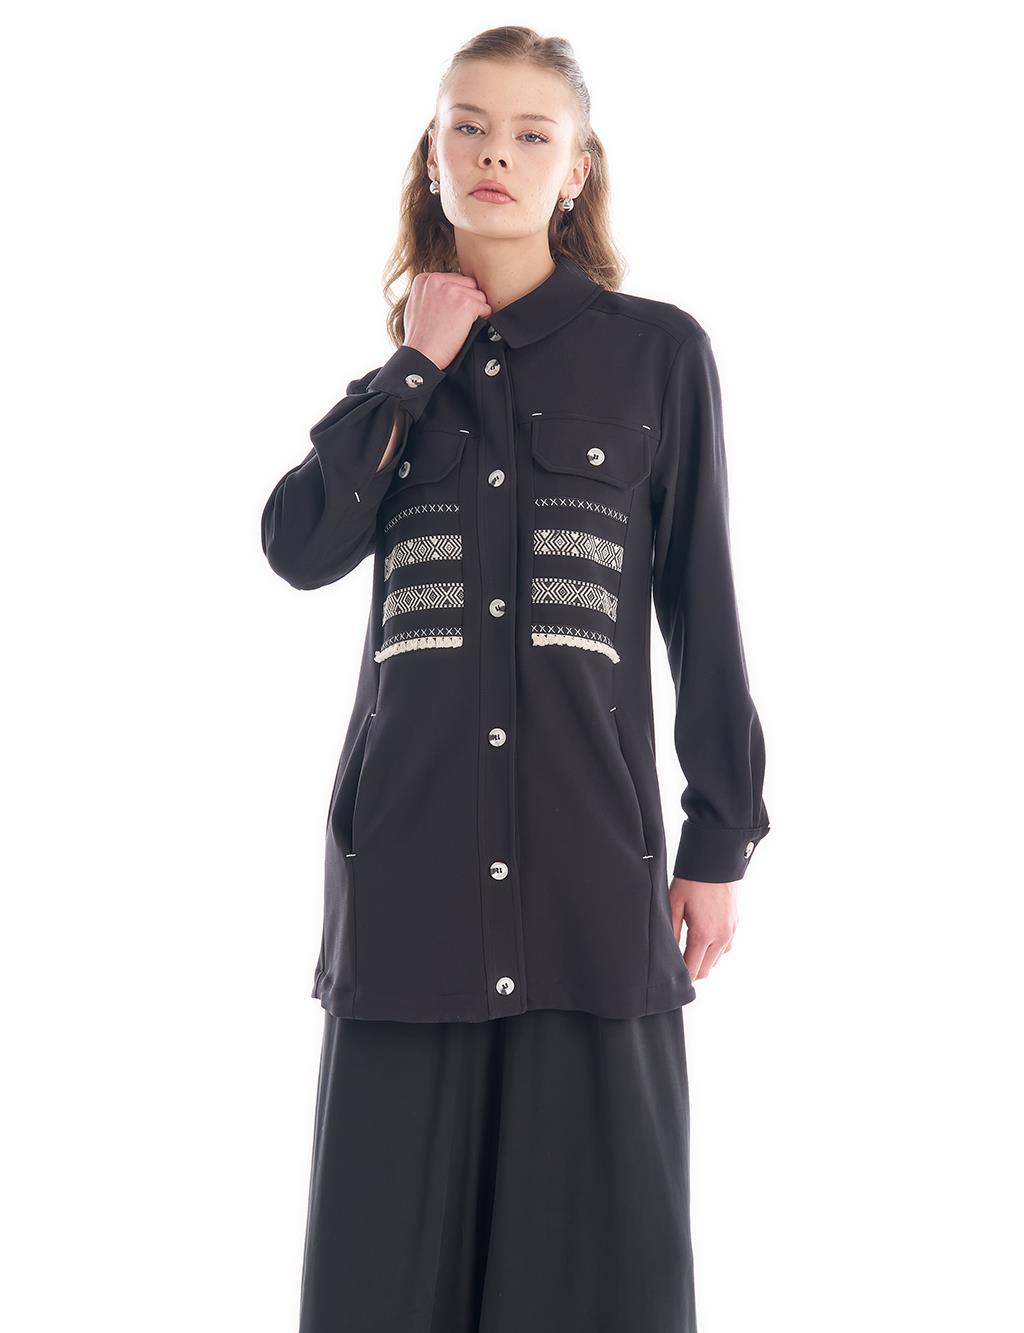 Ethnic Patterned Tassel Jacket Black